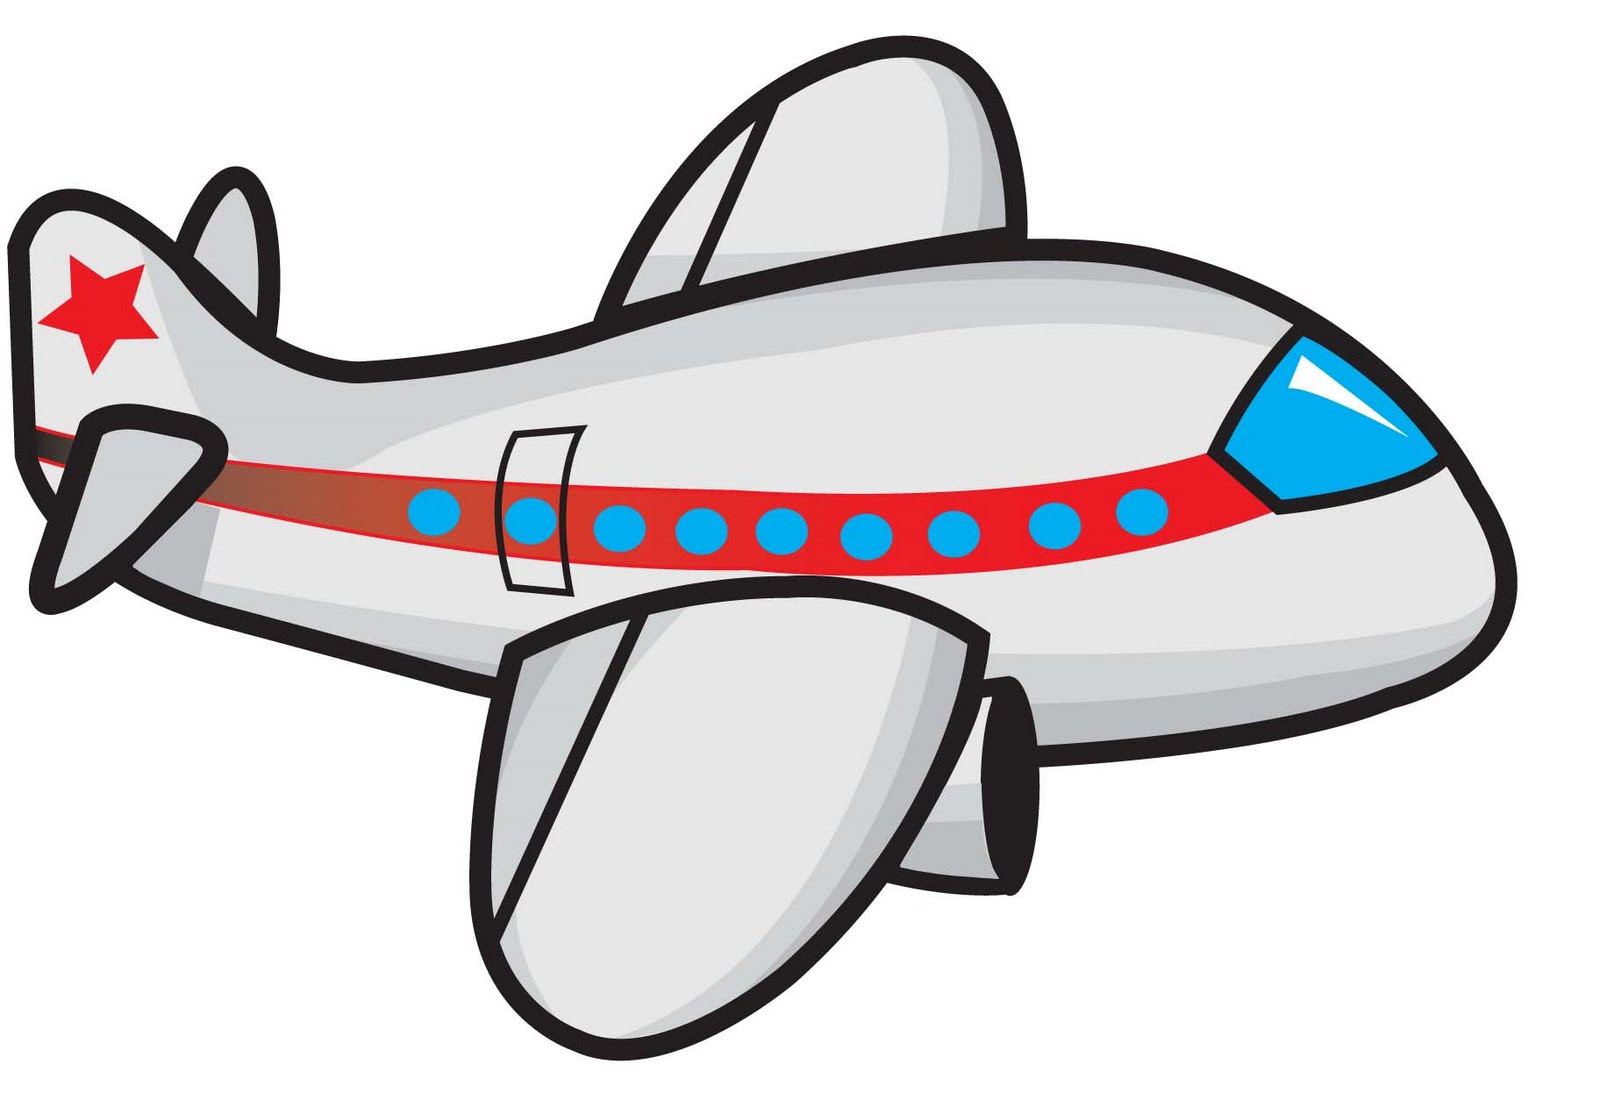 Old Airplane Cartoon - ClipArt Best - ClipArt Best